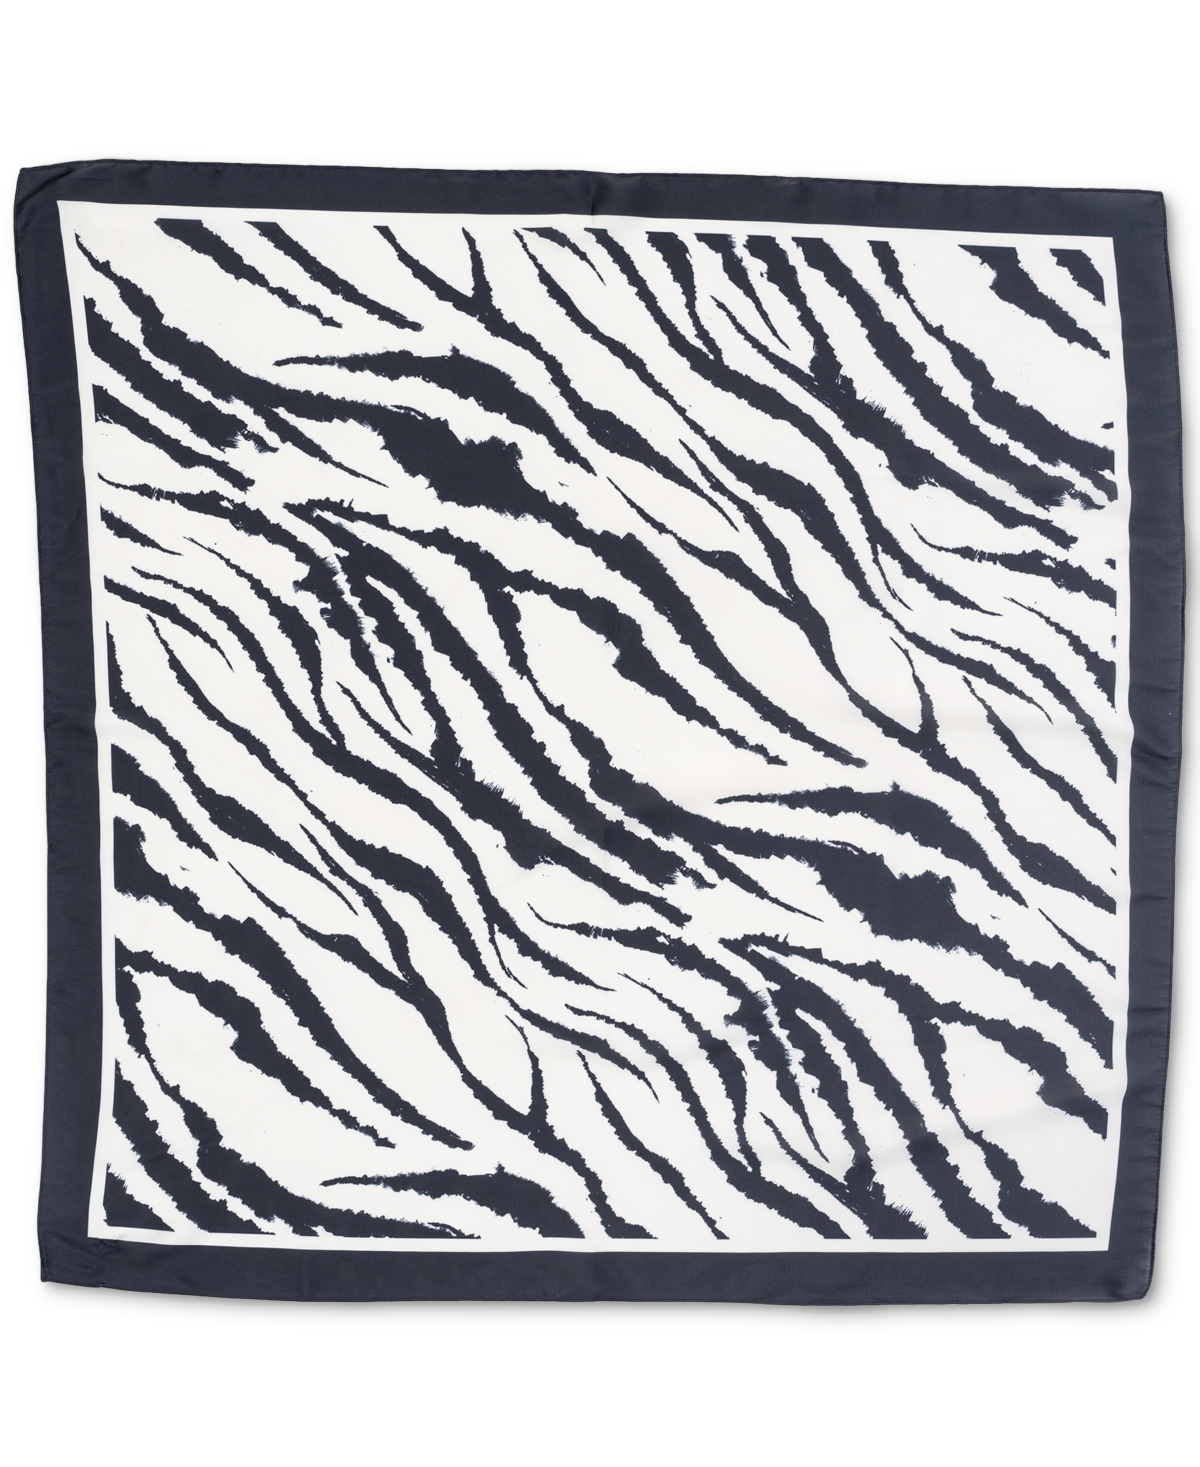 Women's Zebra Striped Square Scarf, Created for Macy's - Black